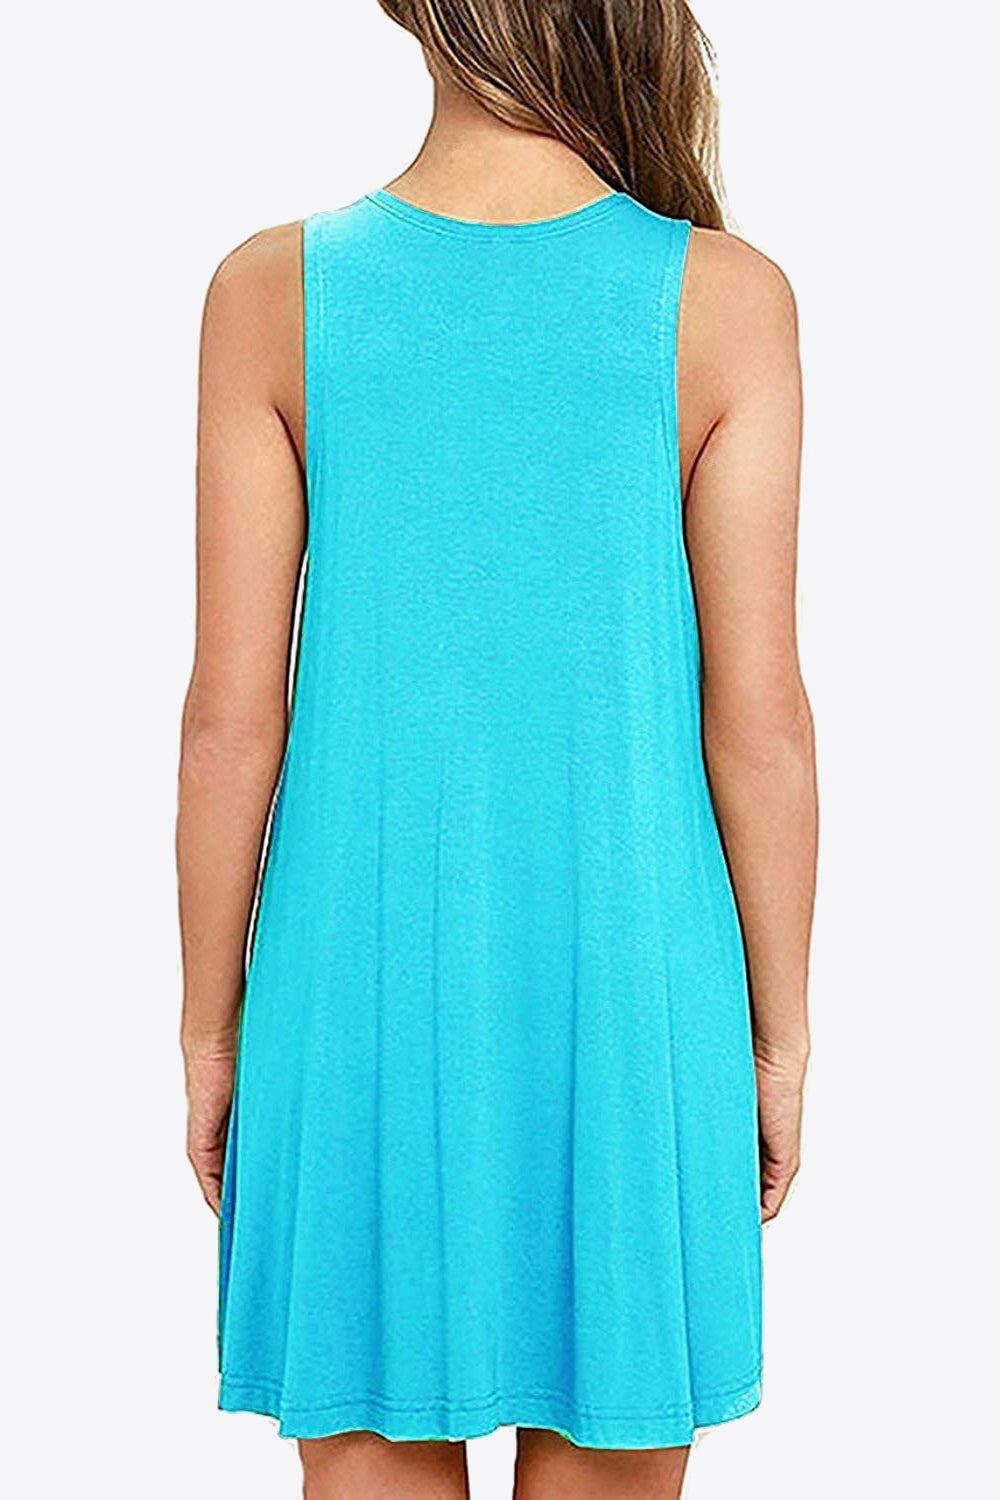 Turquoise Full Size Round Neck Sleeveless Dress with Pockets